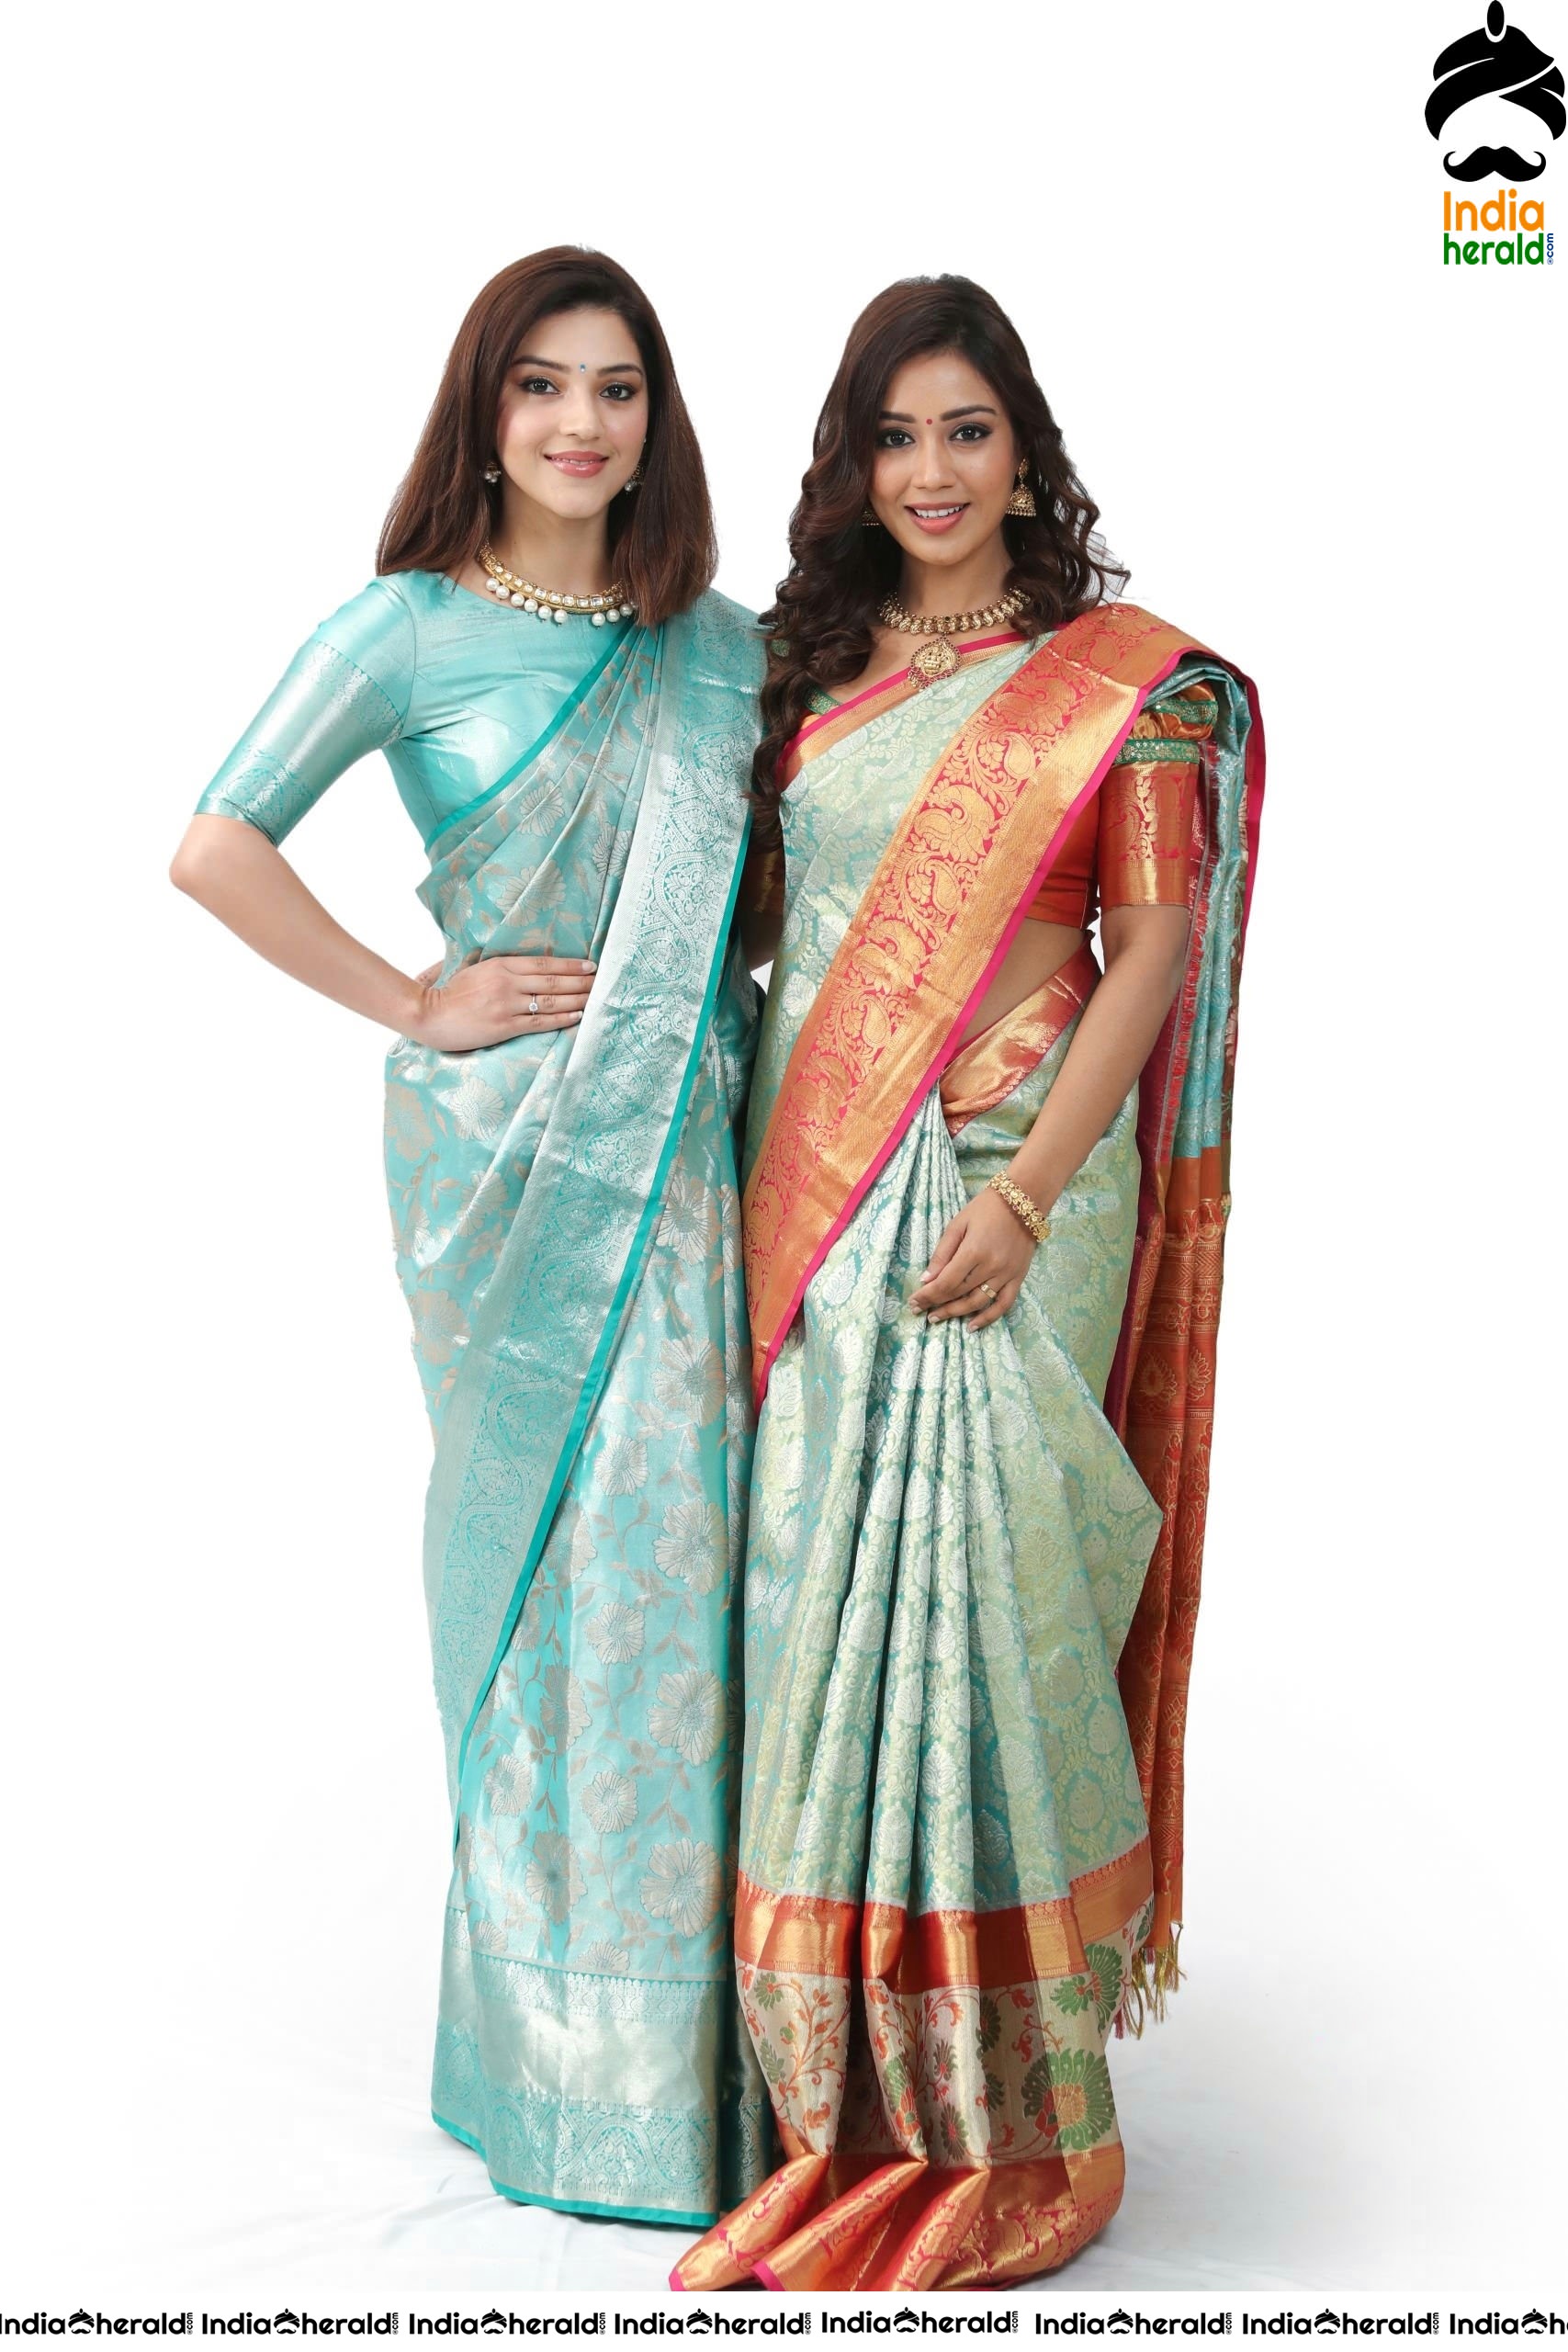 Mehreen Pirzada and Nivetha Pethuraj Photoshoot for a Shopping Mall Ad